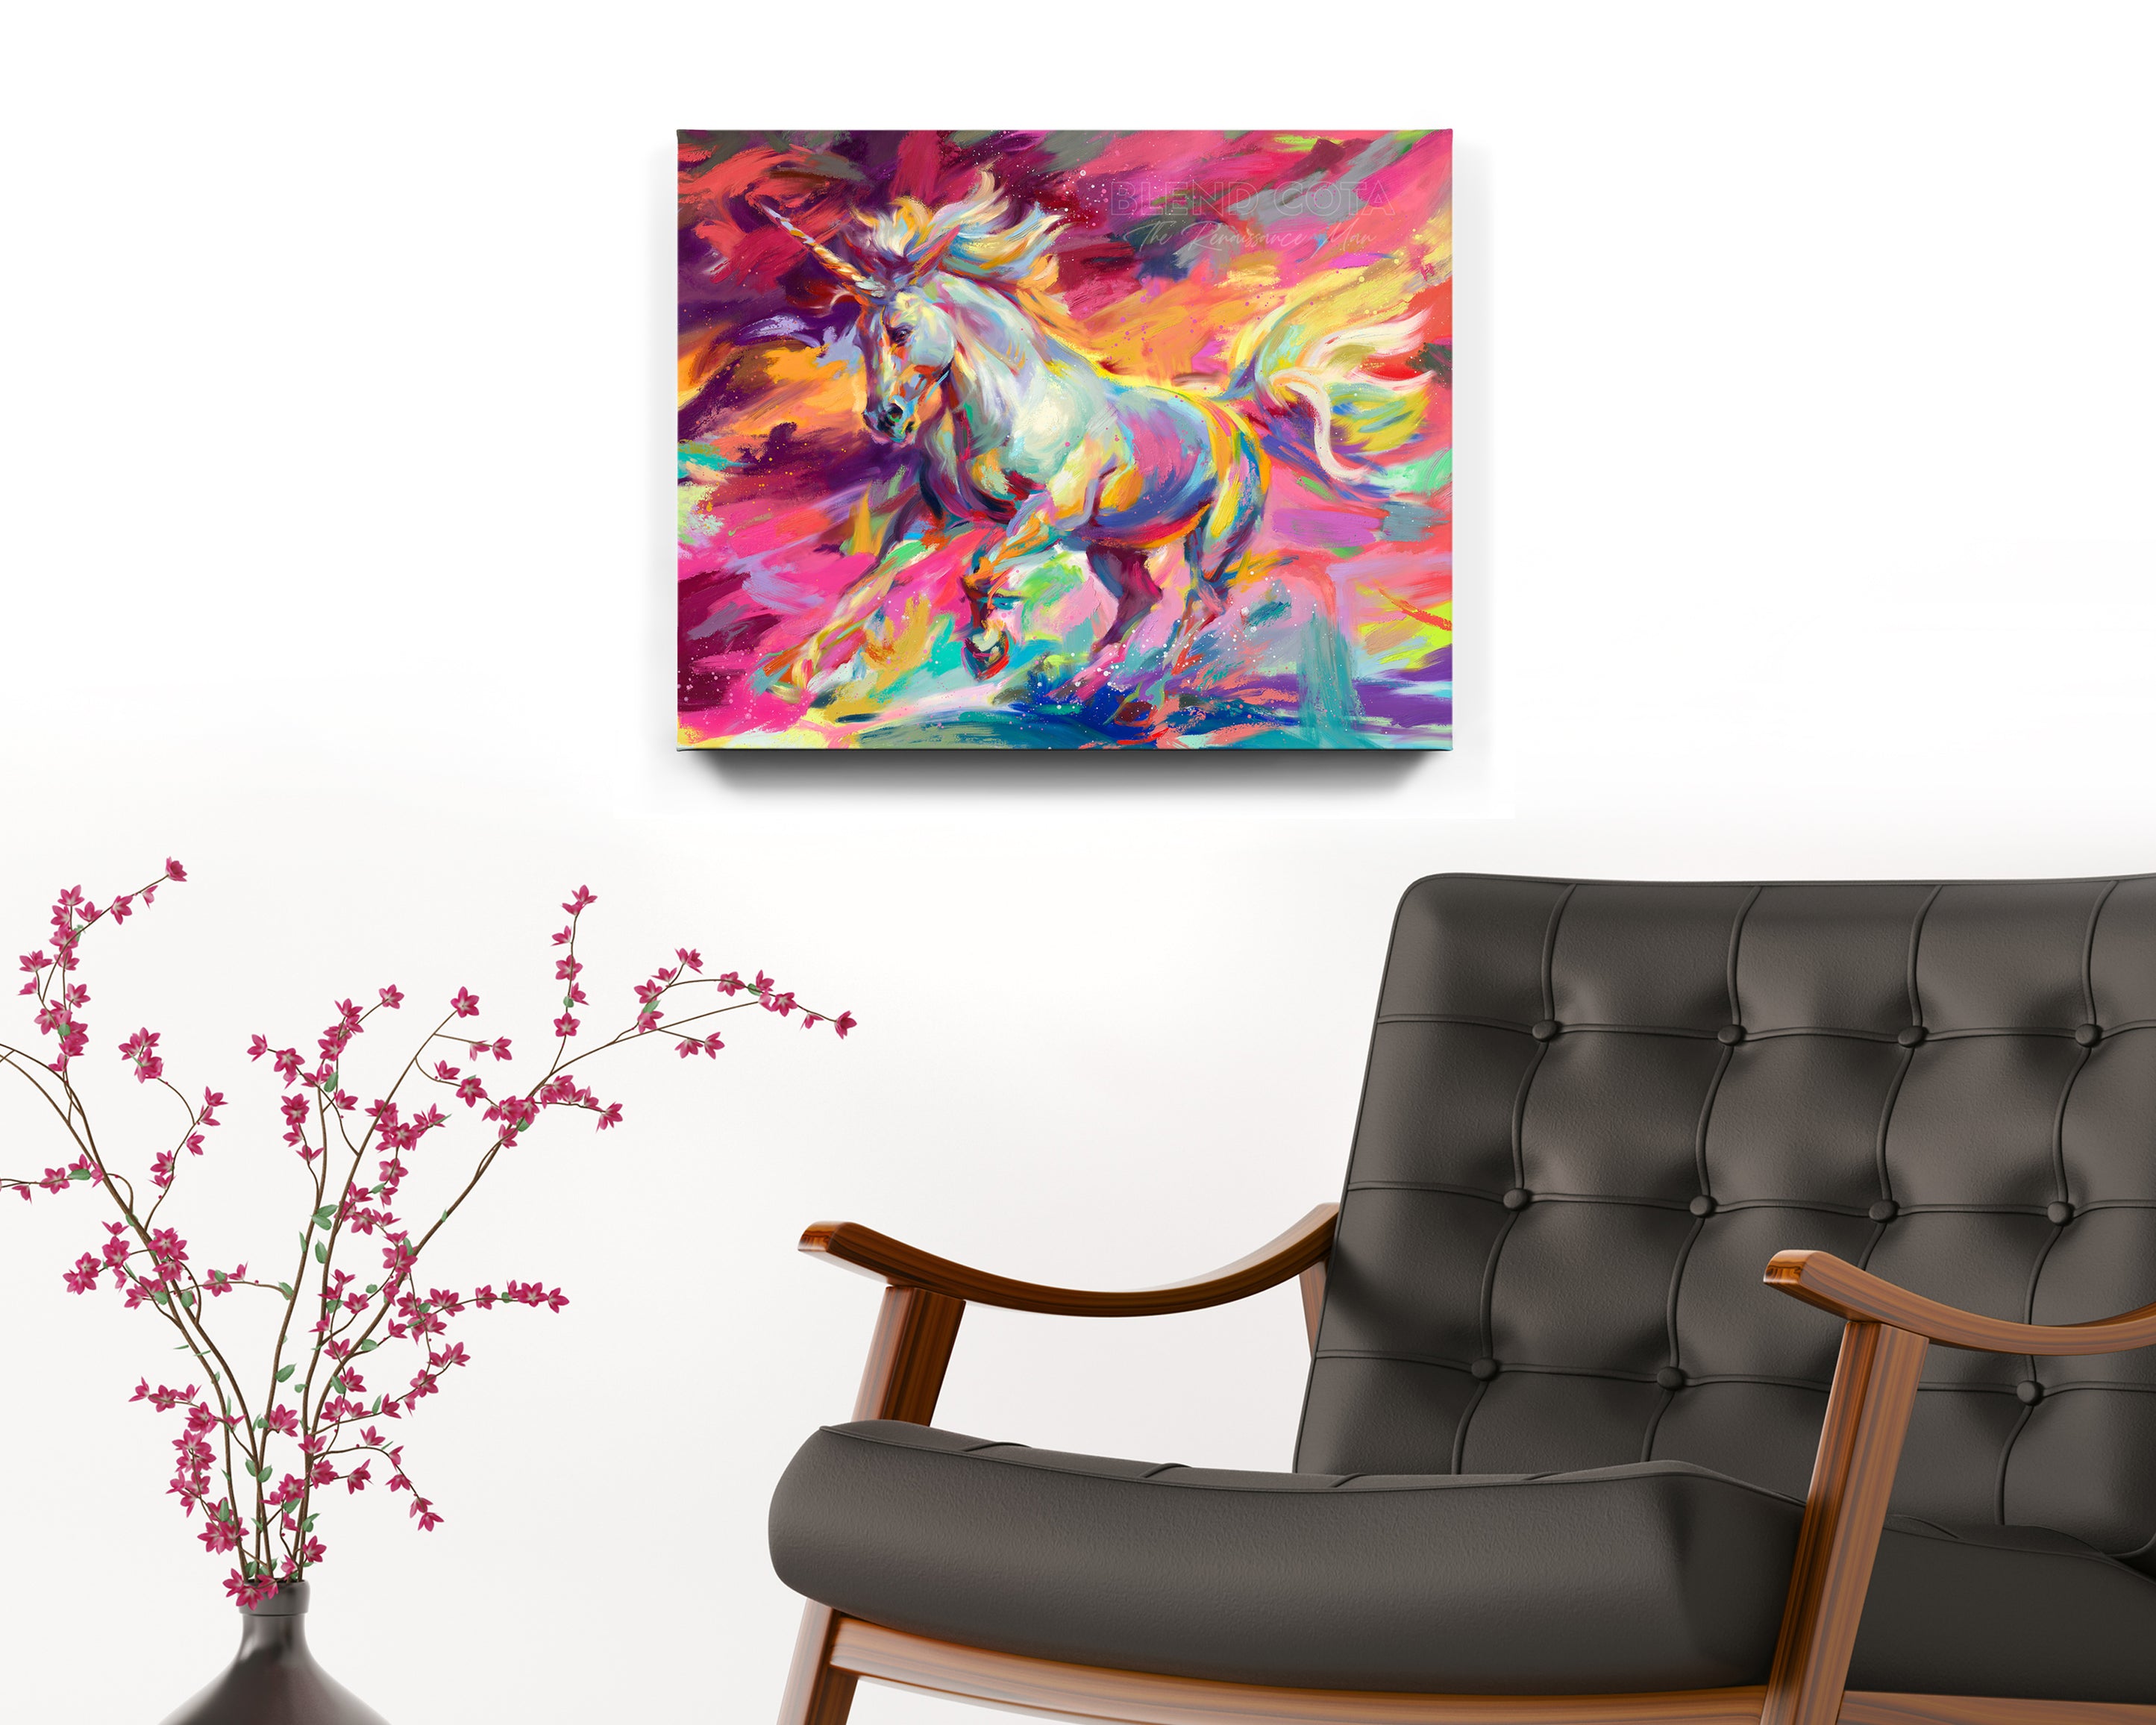 Unicorn - Blend Cota Art Print on Canvas - Blend Cota Studios painting hanging on a white wall